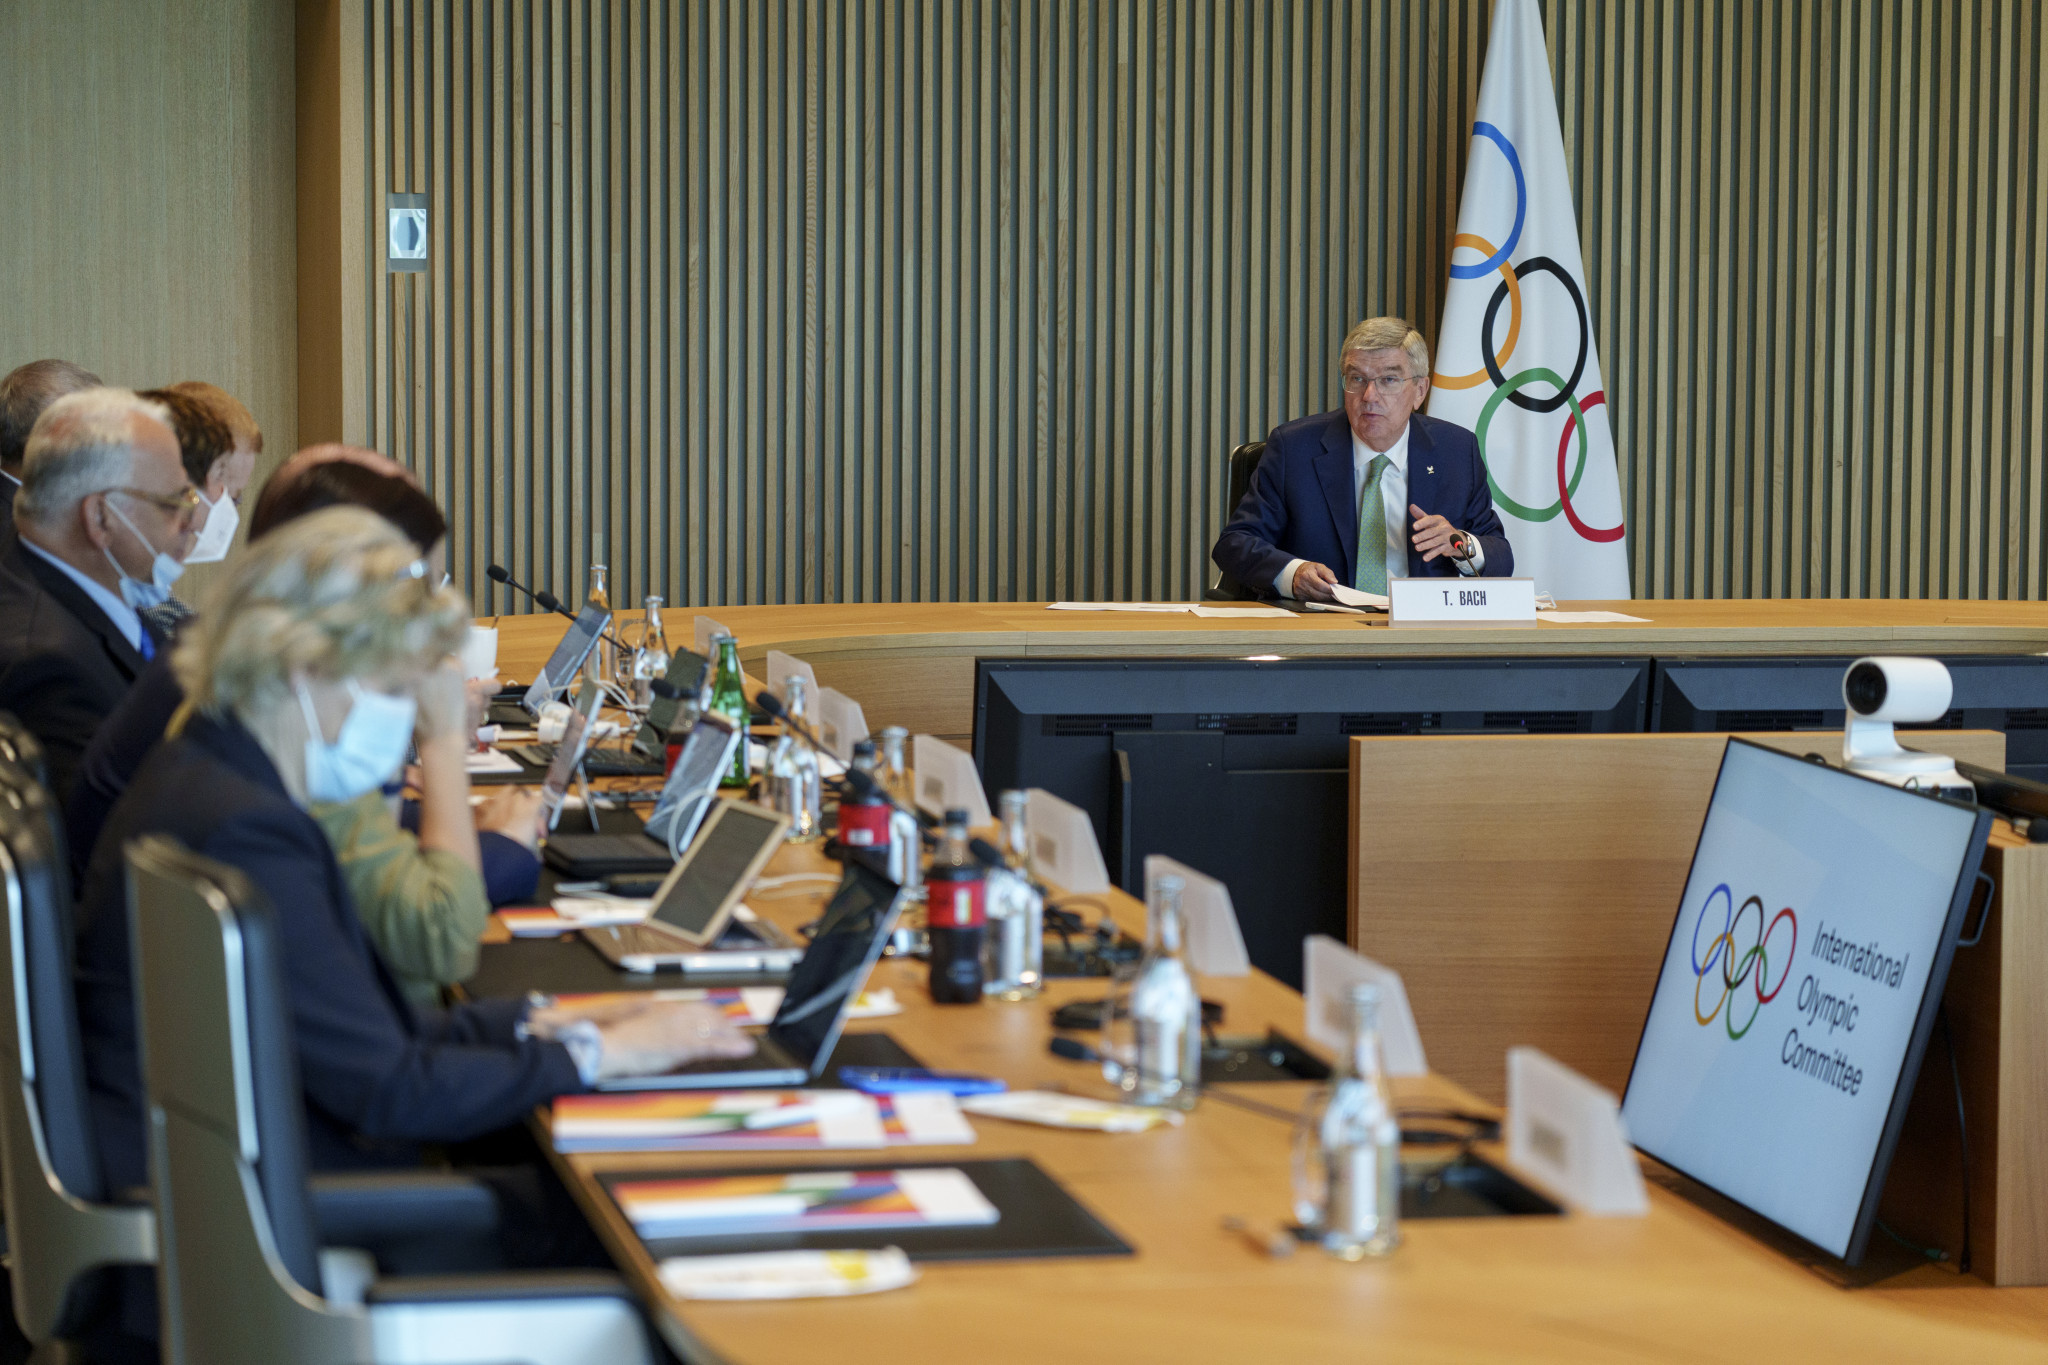 IOC Executive Board approves Los Angeles 2028 sports programme criteria